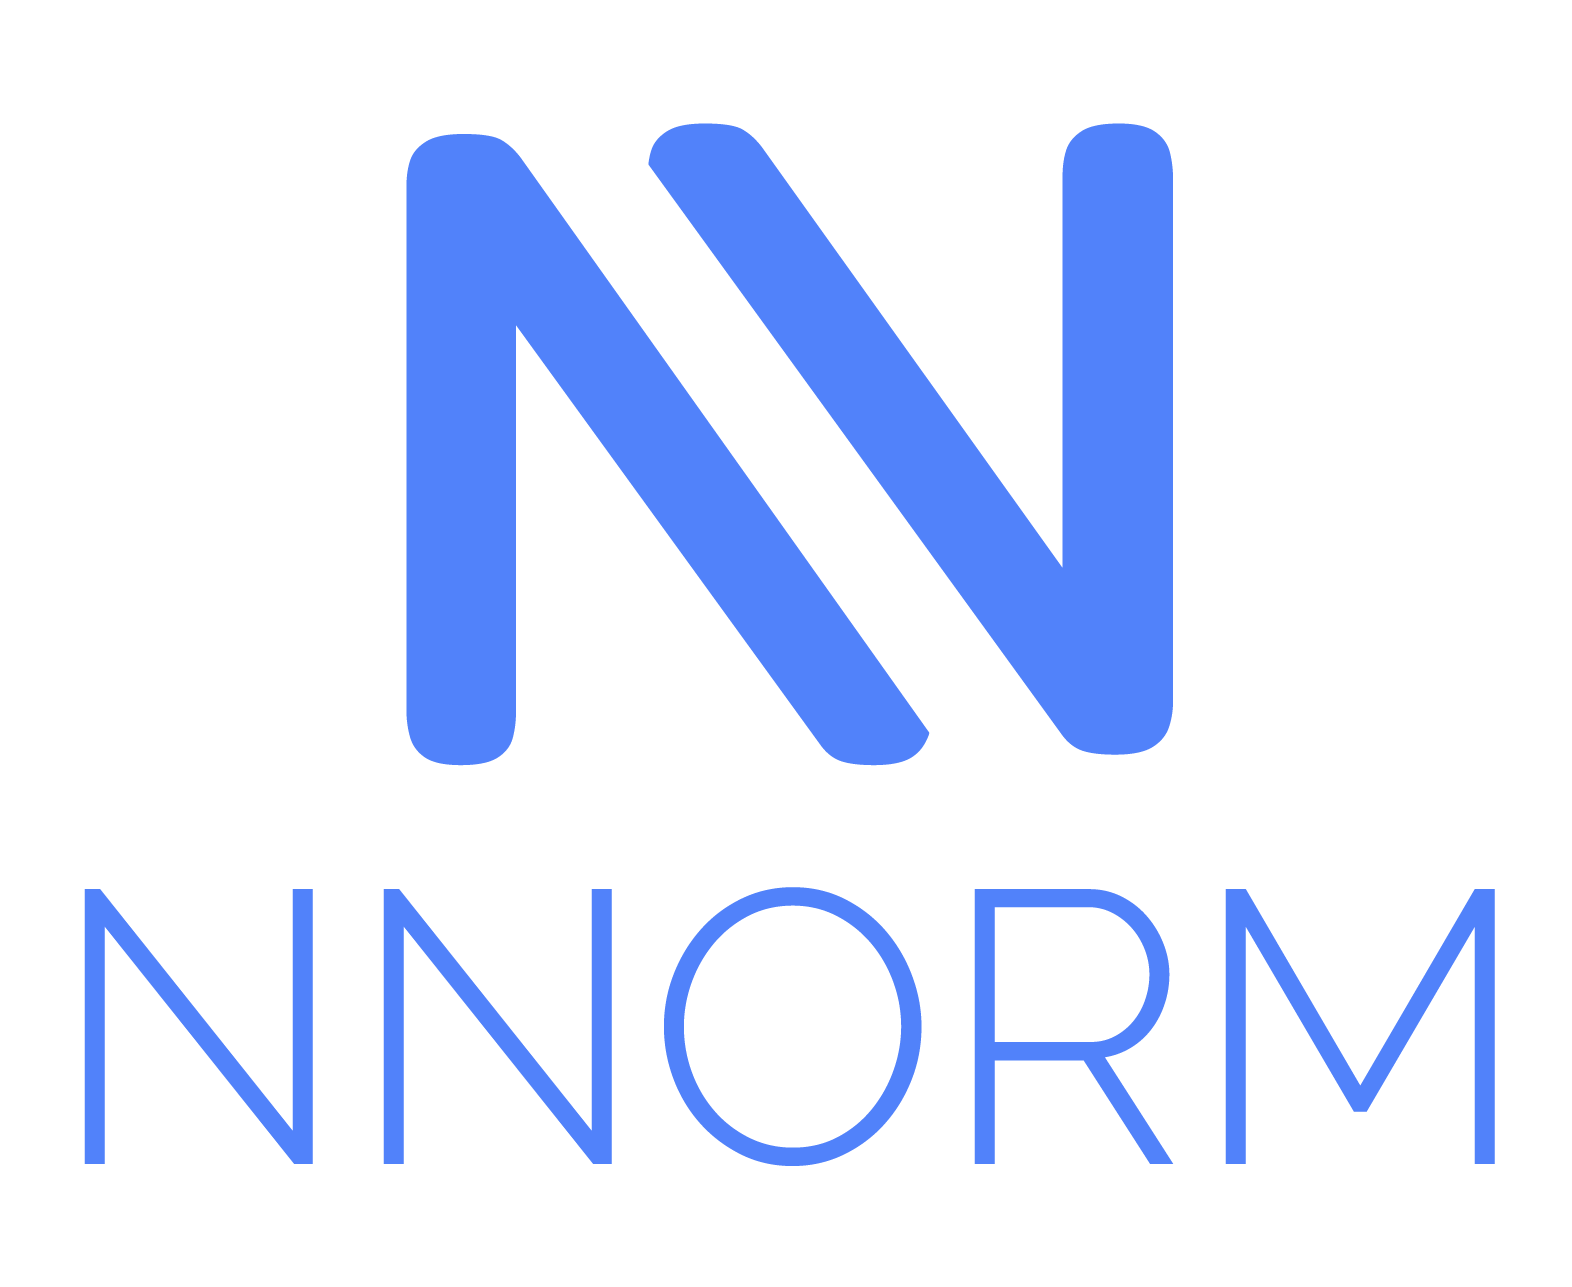 NNORM : Brand Short Description Type Here.